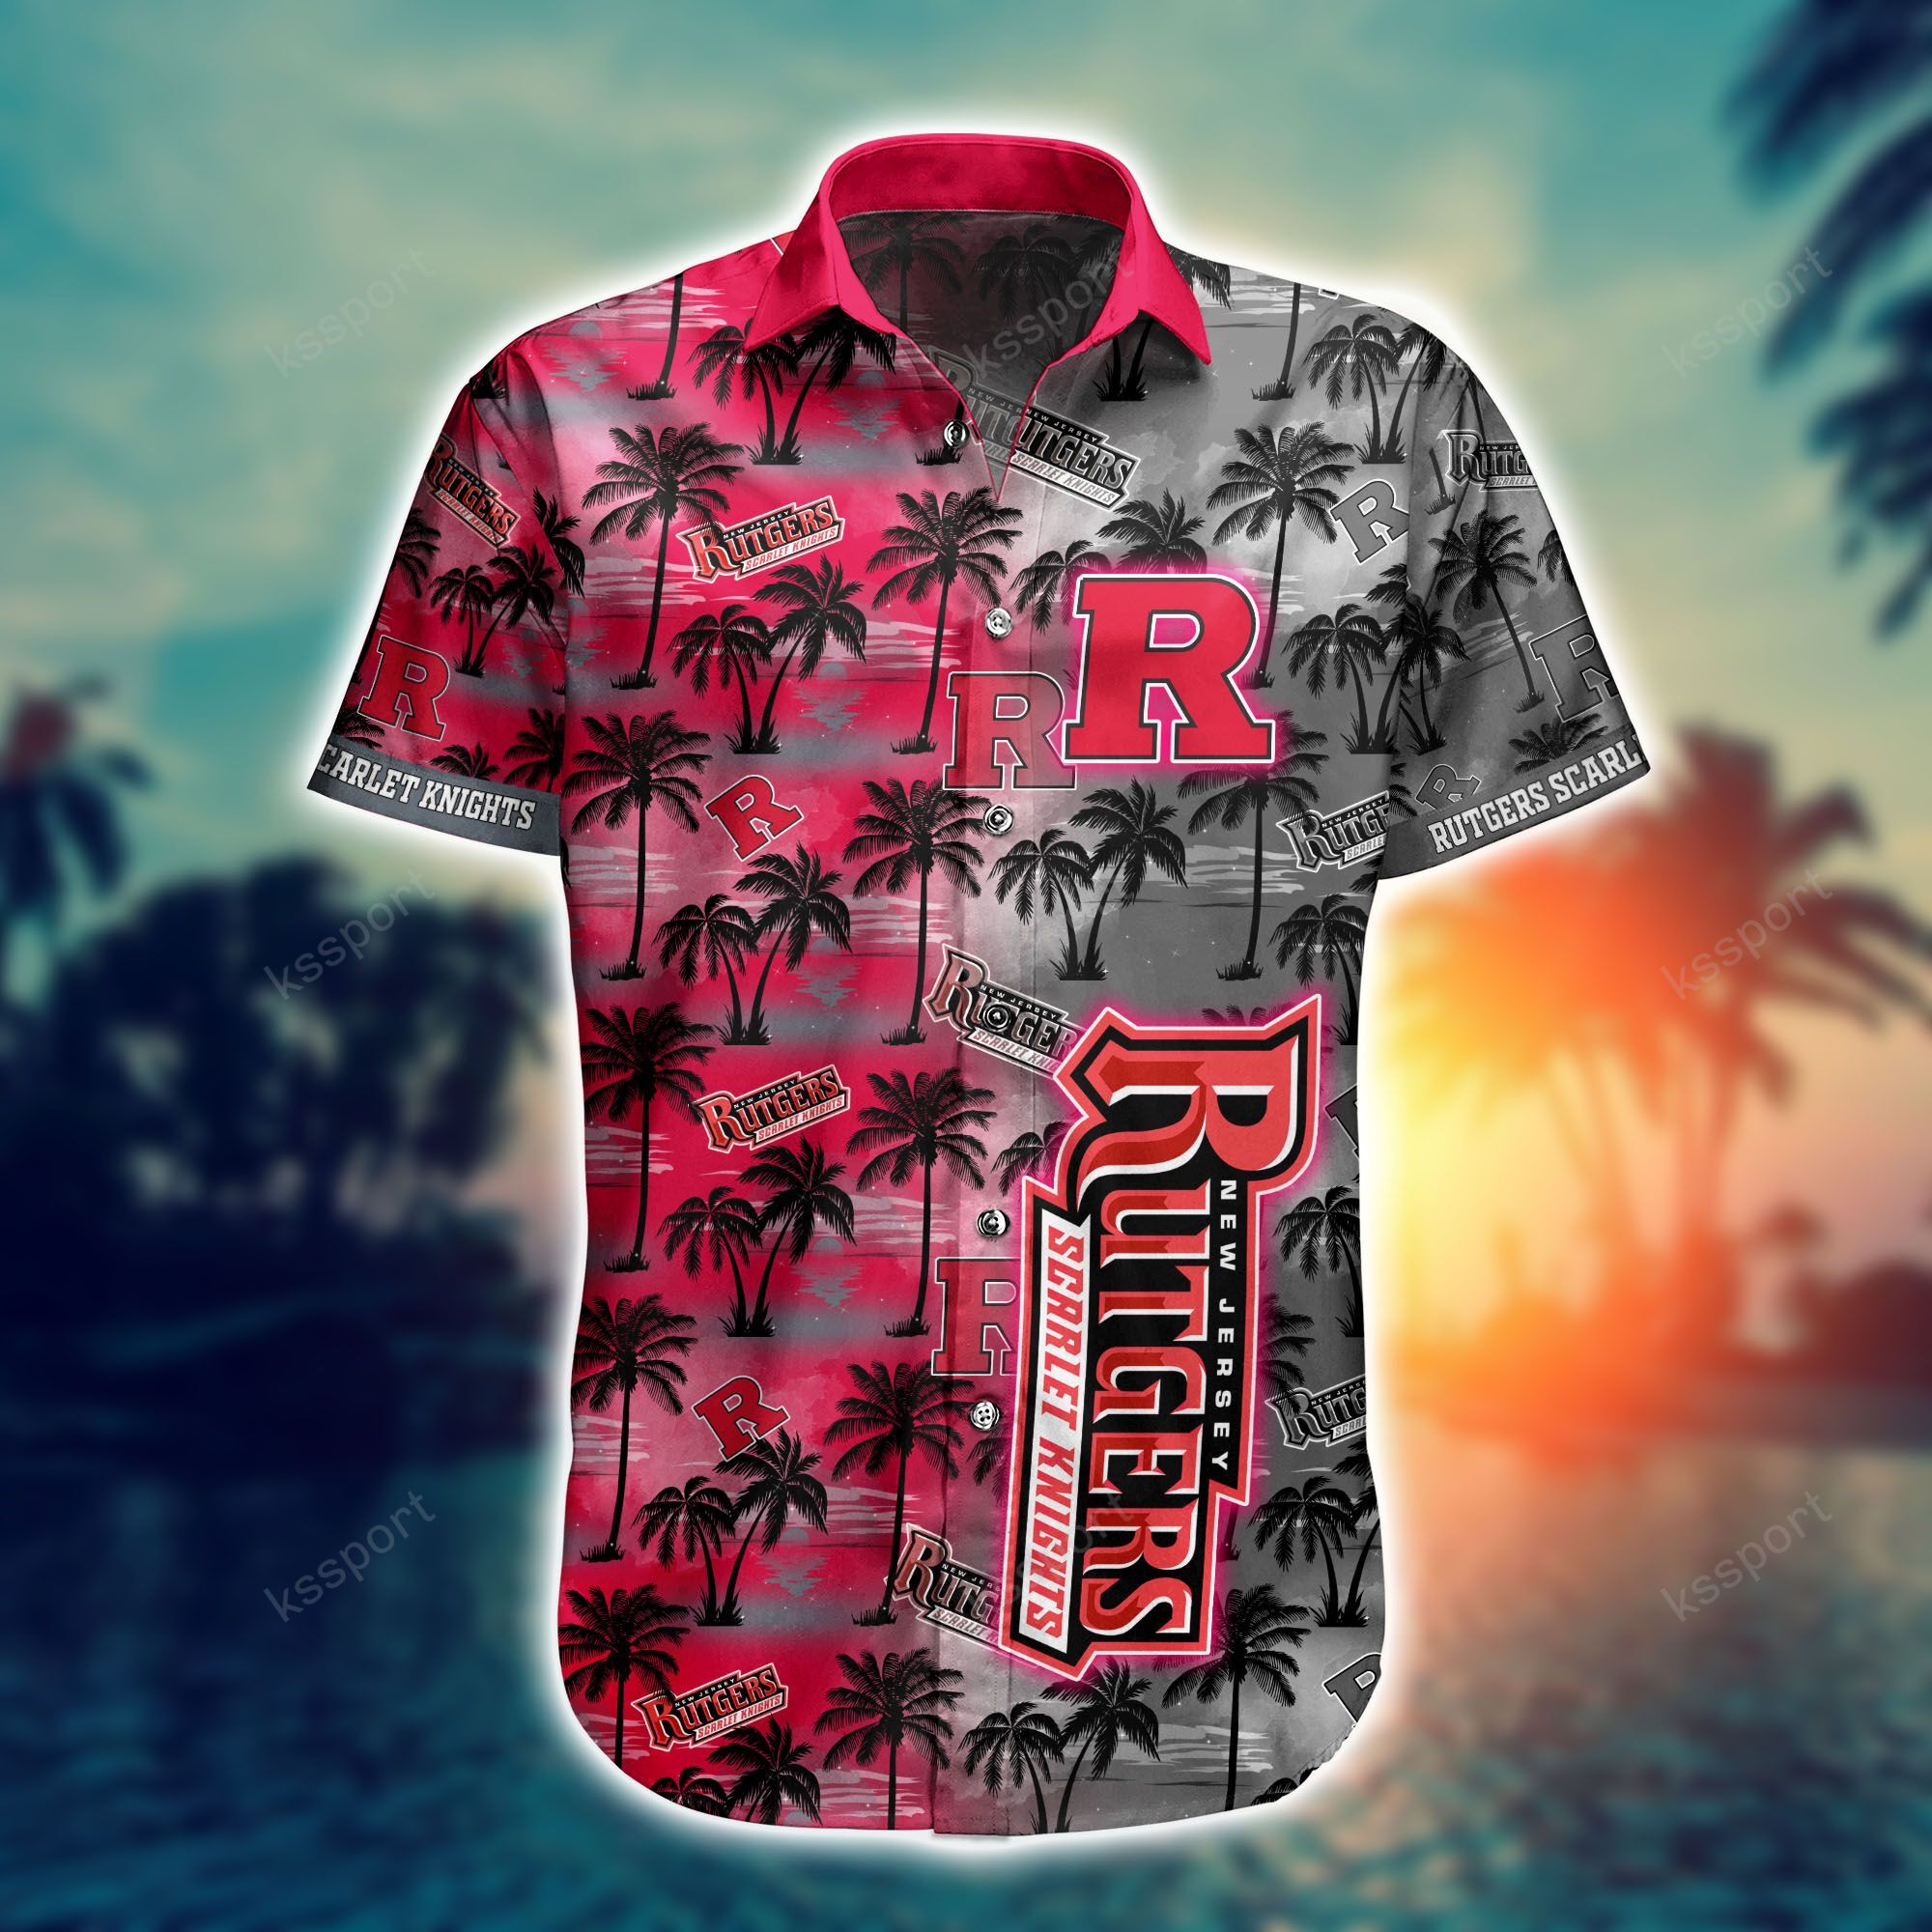 Hawaiian shirt and shorts is a great way to look stylish at a beach party 20